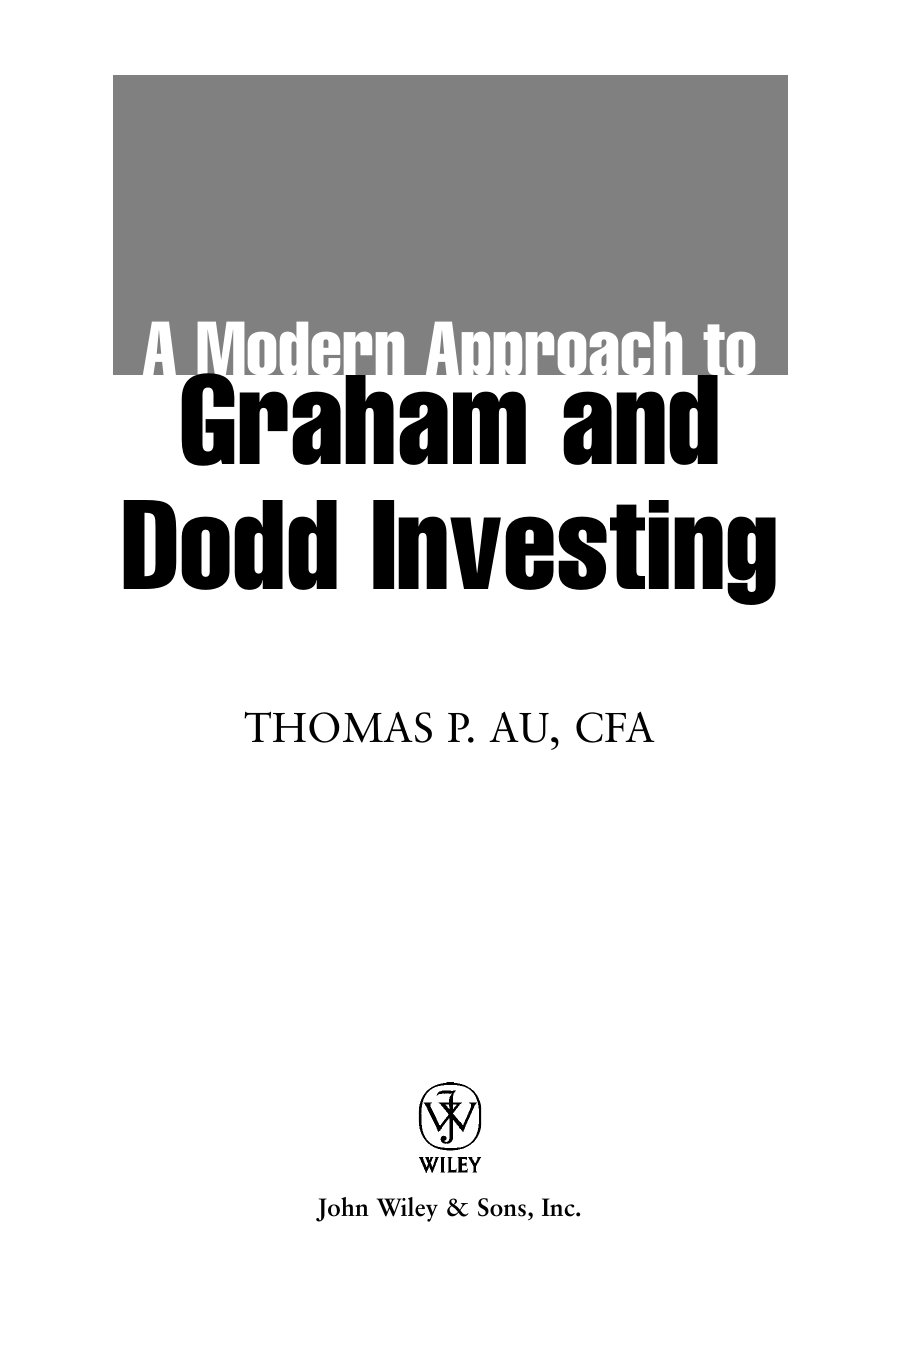 Graham and Dodd Investing